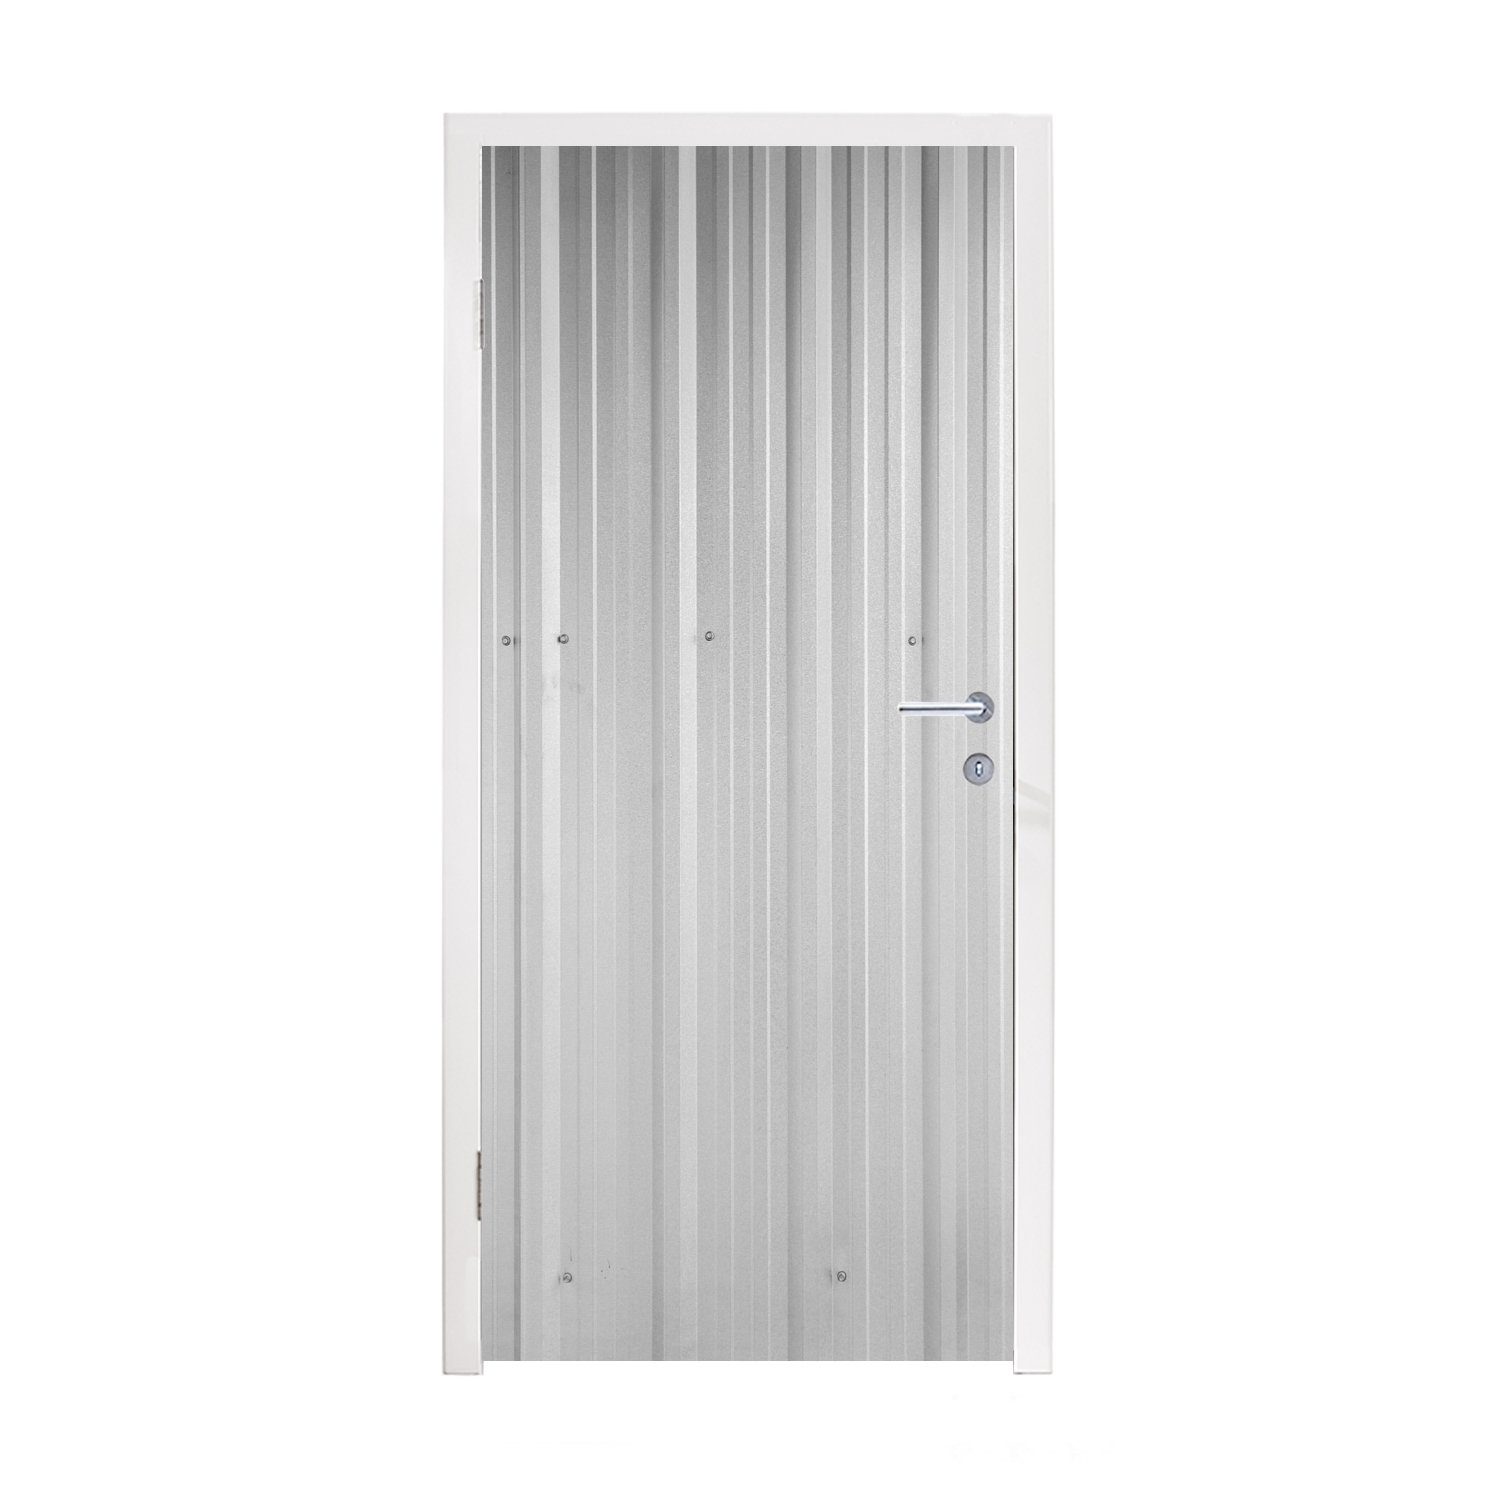 MuchoWow Türtapete Wellbleche - Metall - grau, Matt, bedruckt, (1 St), Fototapete für Tür, Türaufkleber, 75x205 cm